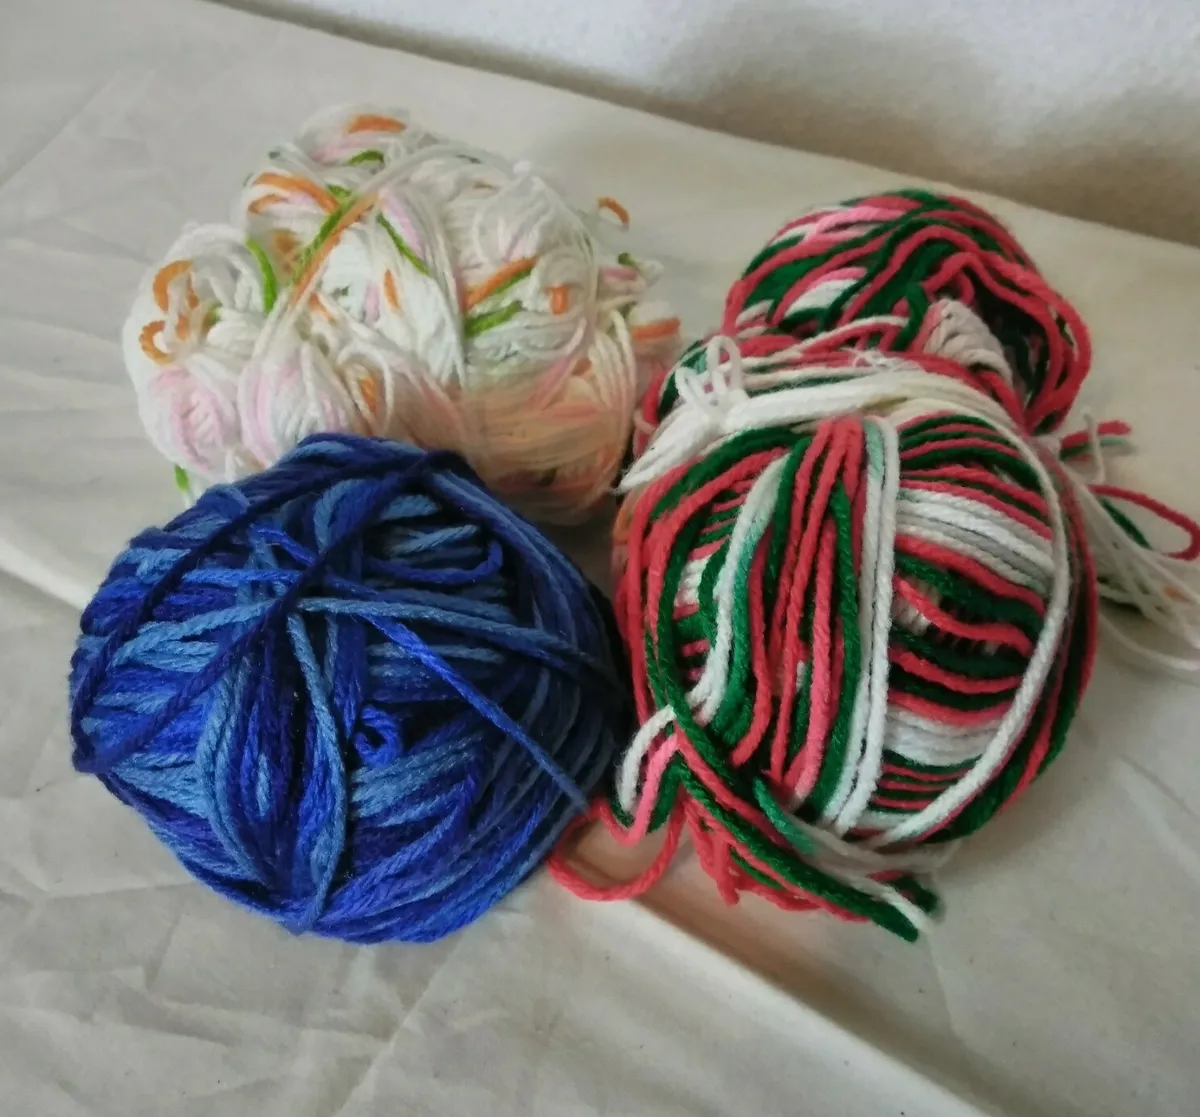 Mixed Lot Yarn 12oz Colorful Variegated Knitting Crochet Craft Worsted Yarn